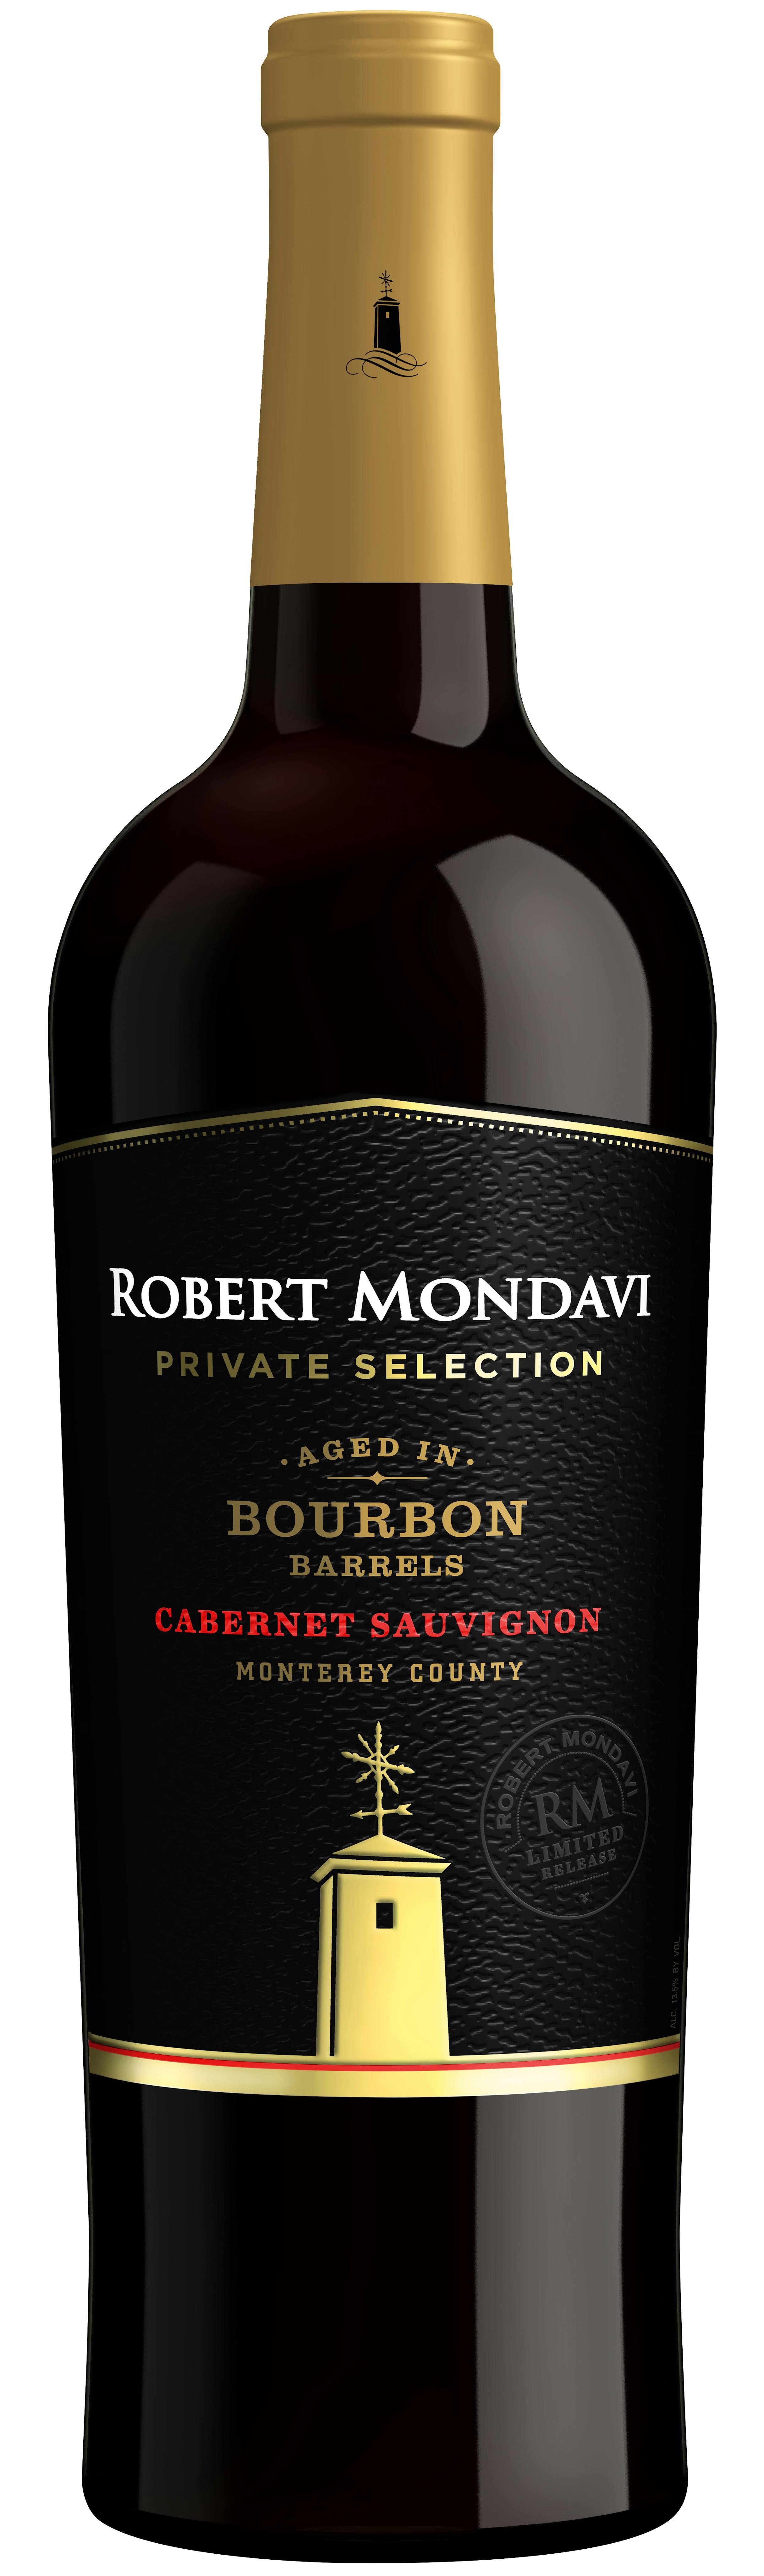 robert-mondavi-private-selection-bourbon-barrel-aged-cabernet-sauvignon